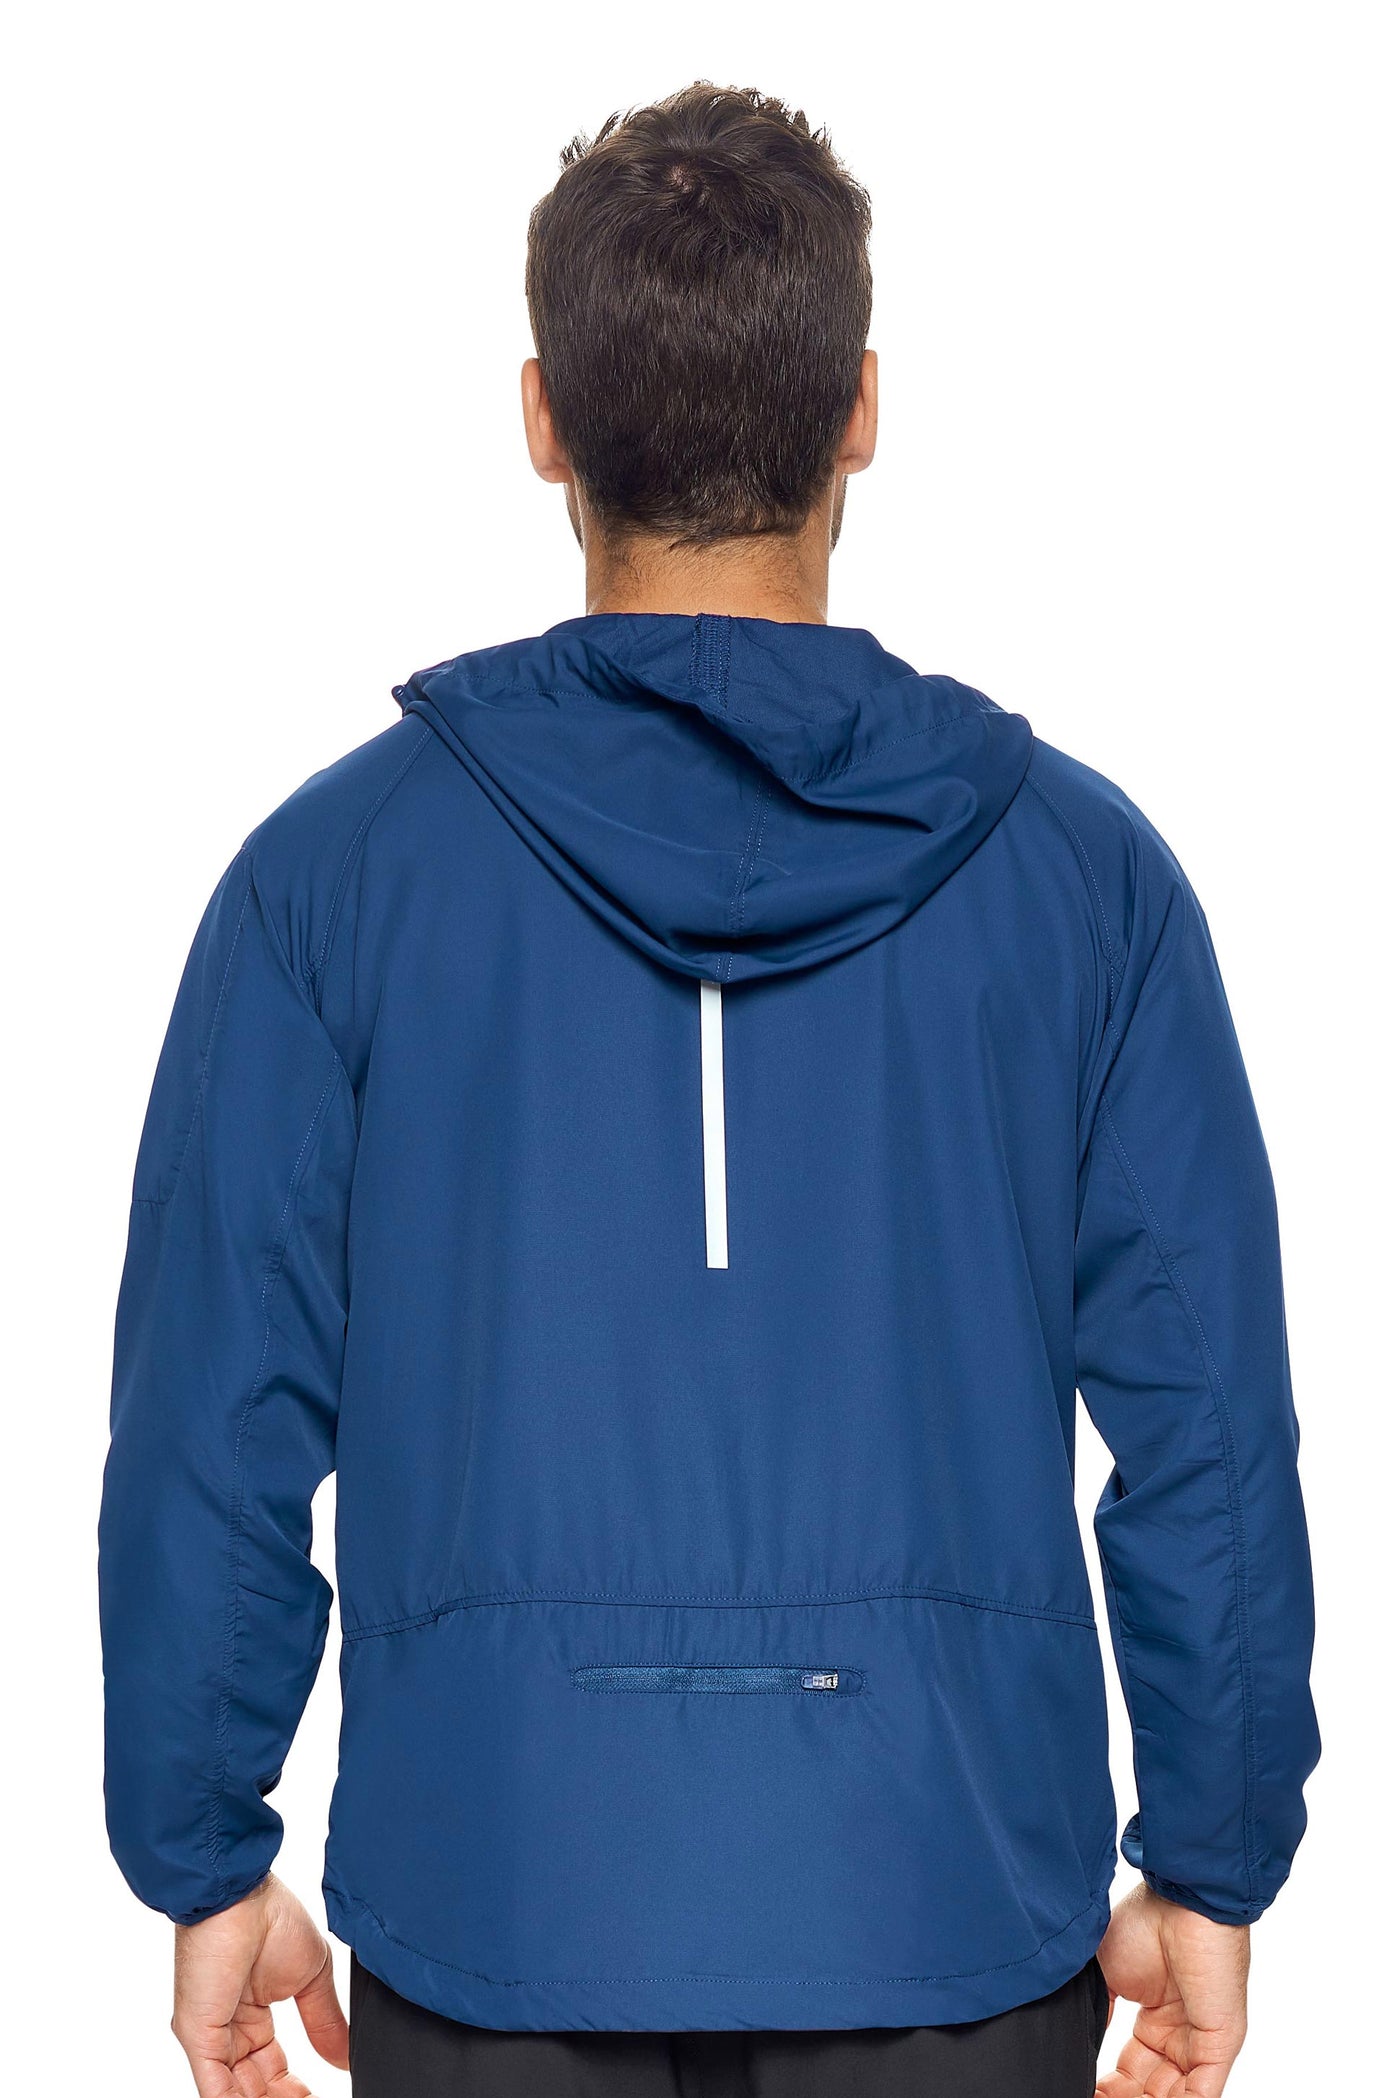 Expert Brand Retail Men's Hooded Swift Tec Water Resistant Jacket Navy#color_navy